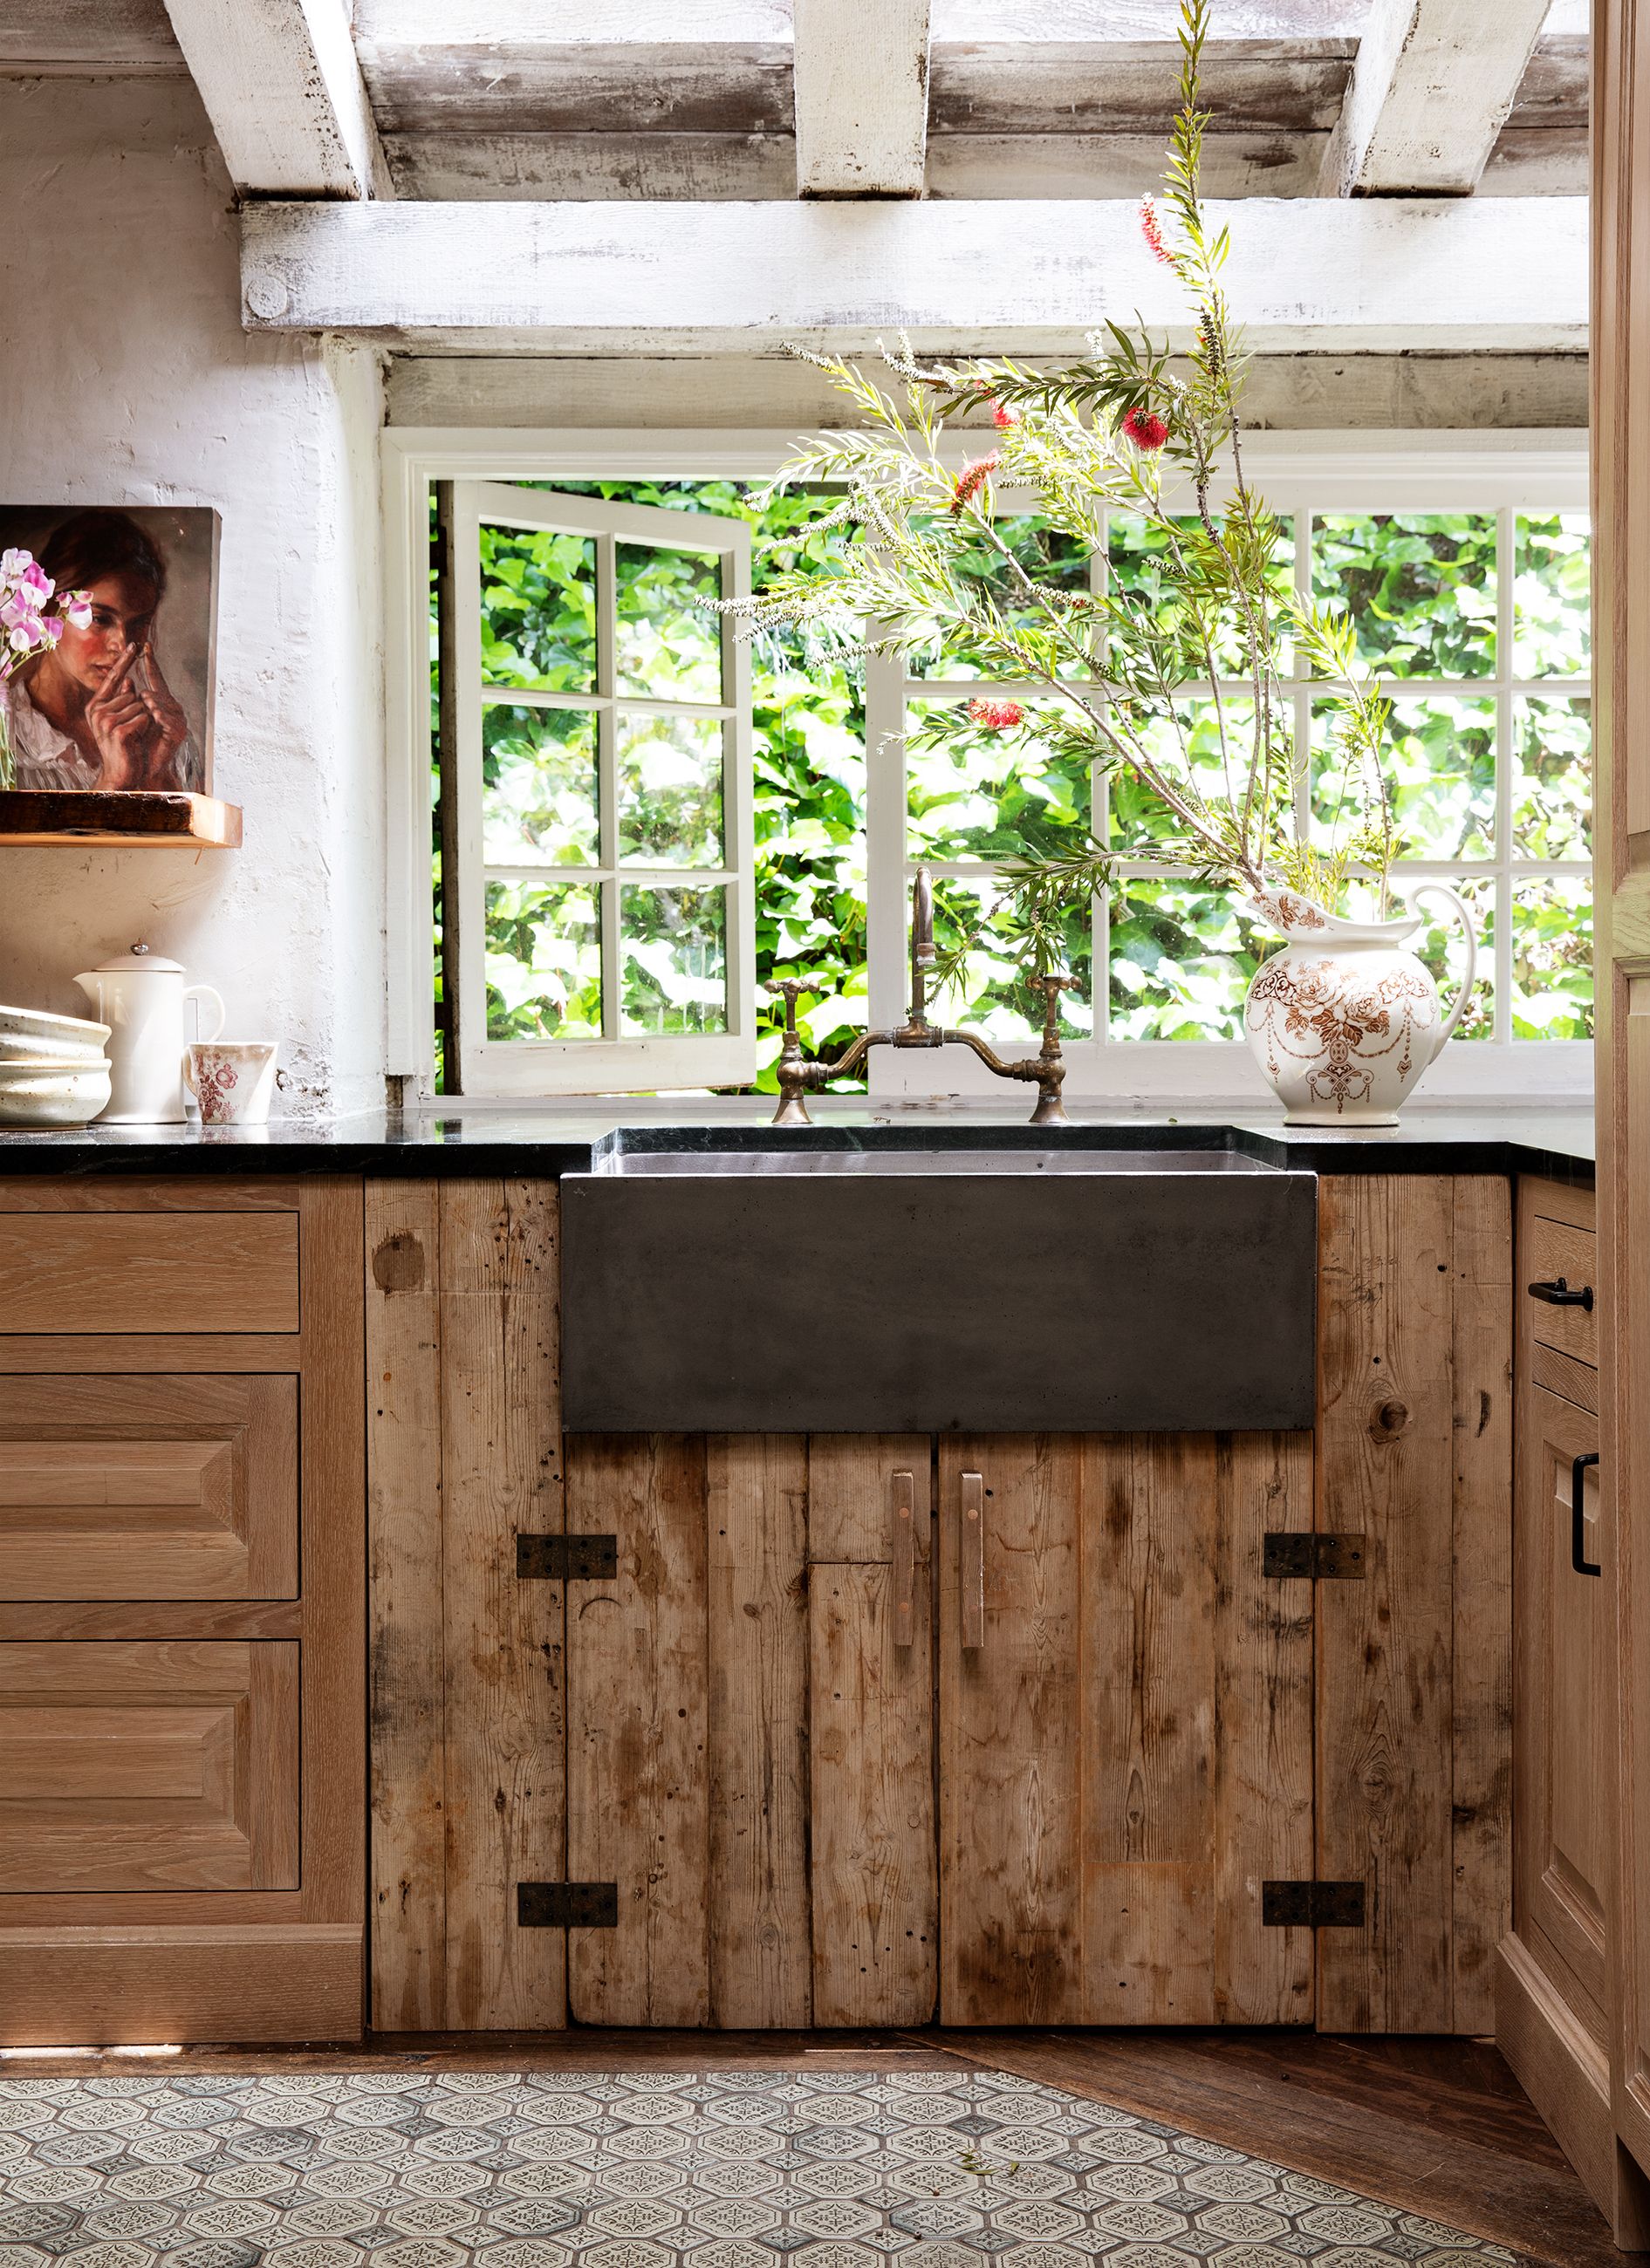 25 Best Kitchen Ideas   Decor and Decorating Ideas for Kitchen Design